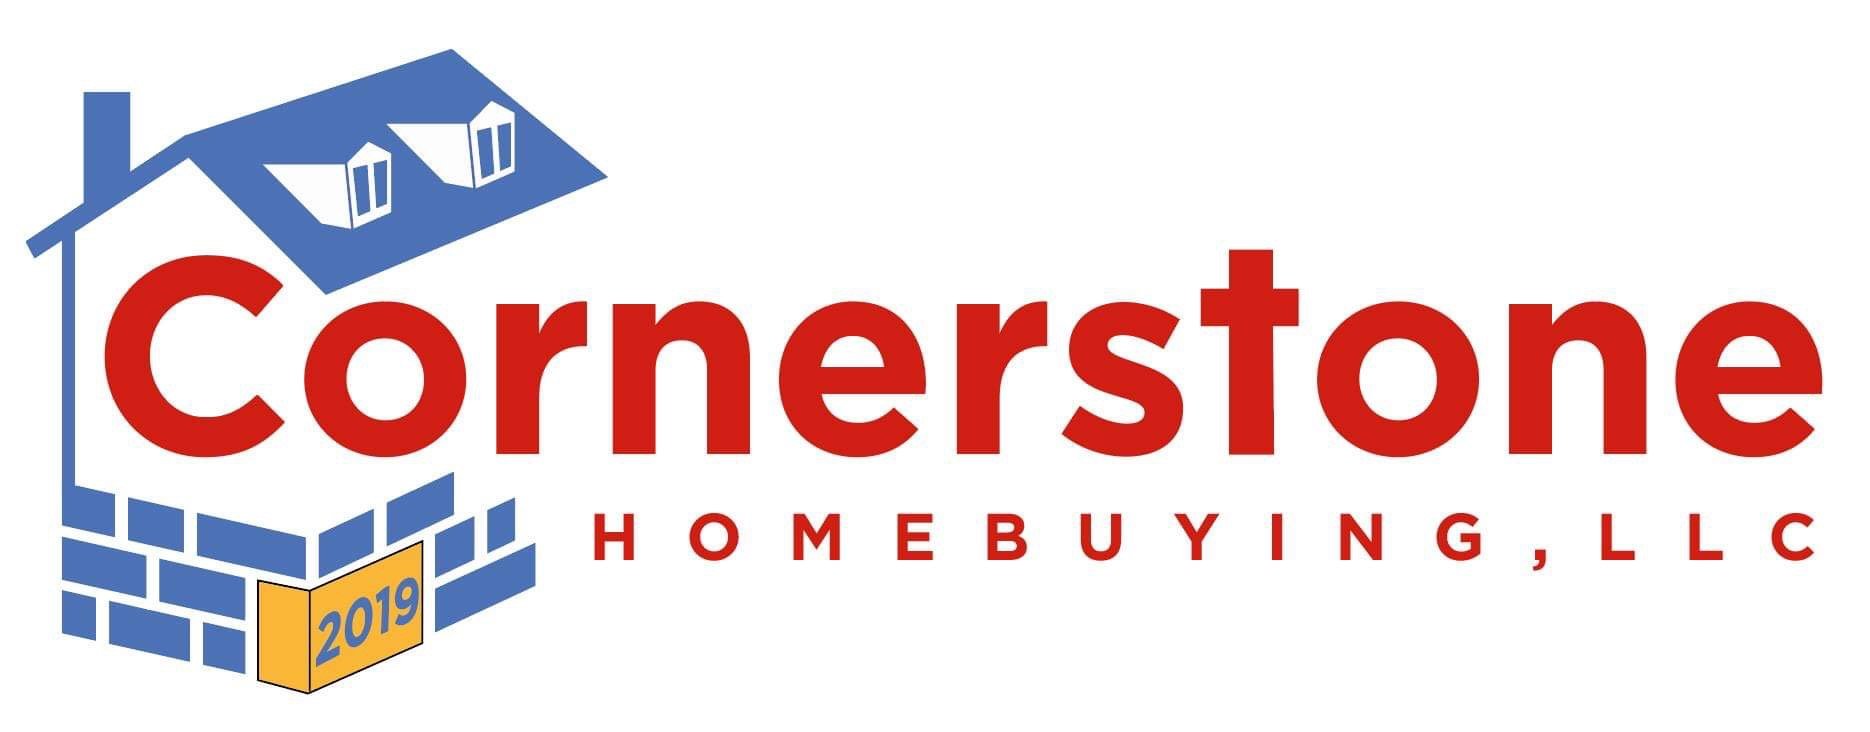 Cornerstone Homebuying, LLC  logo